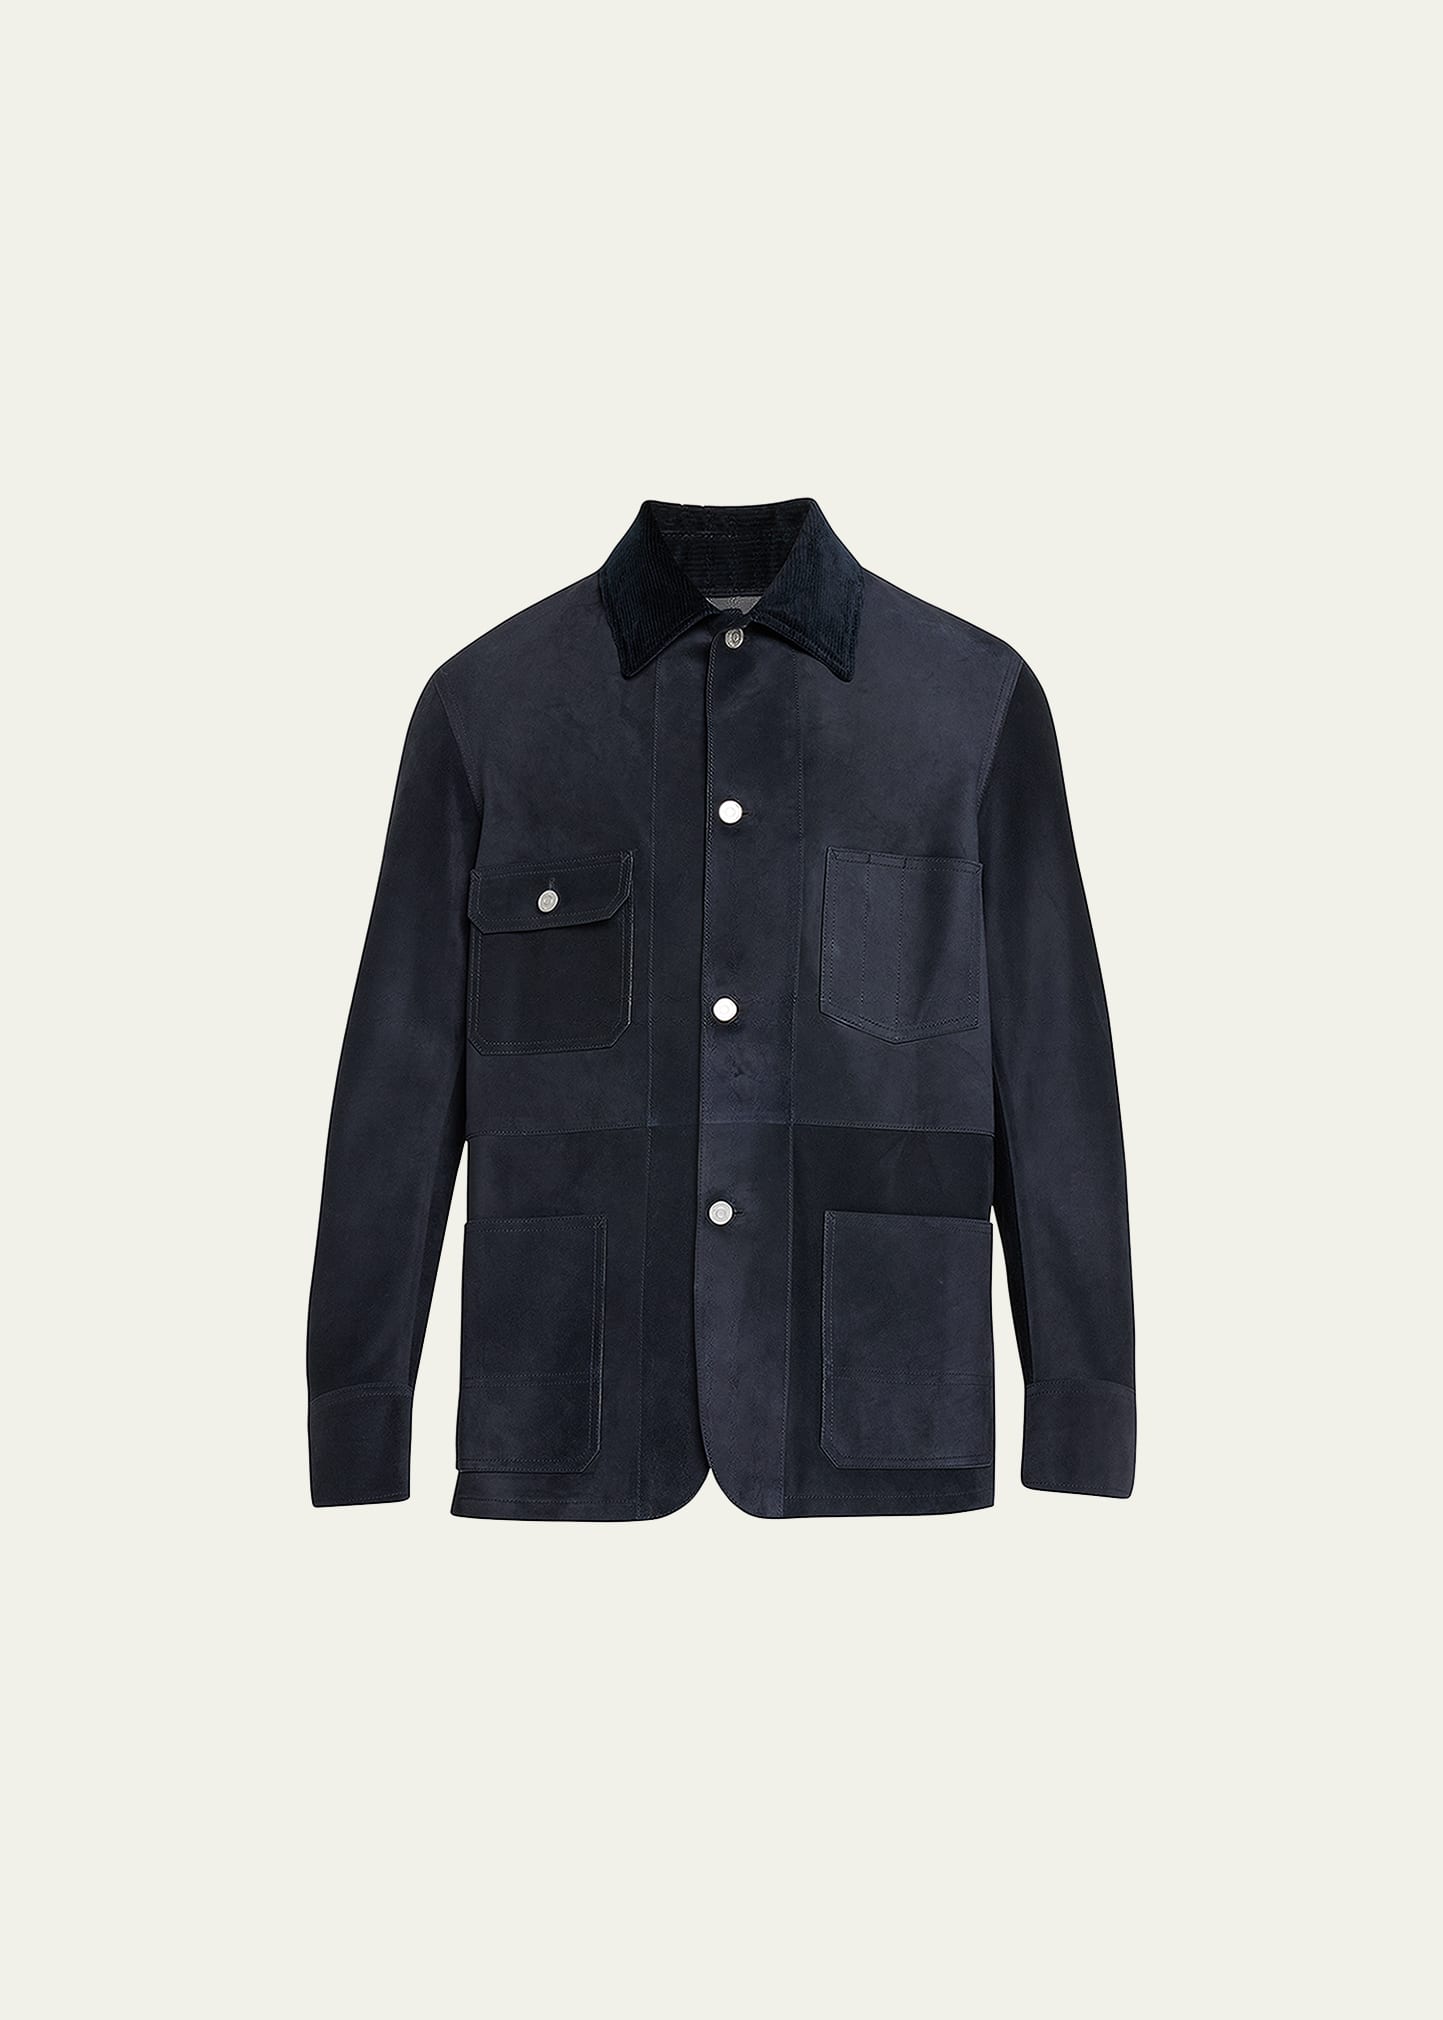 Berluti Men's Corduroy Collar Suede-Leather Jacket